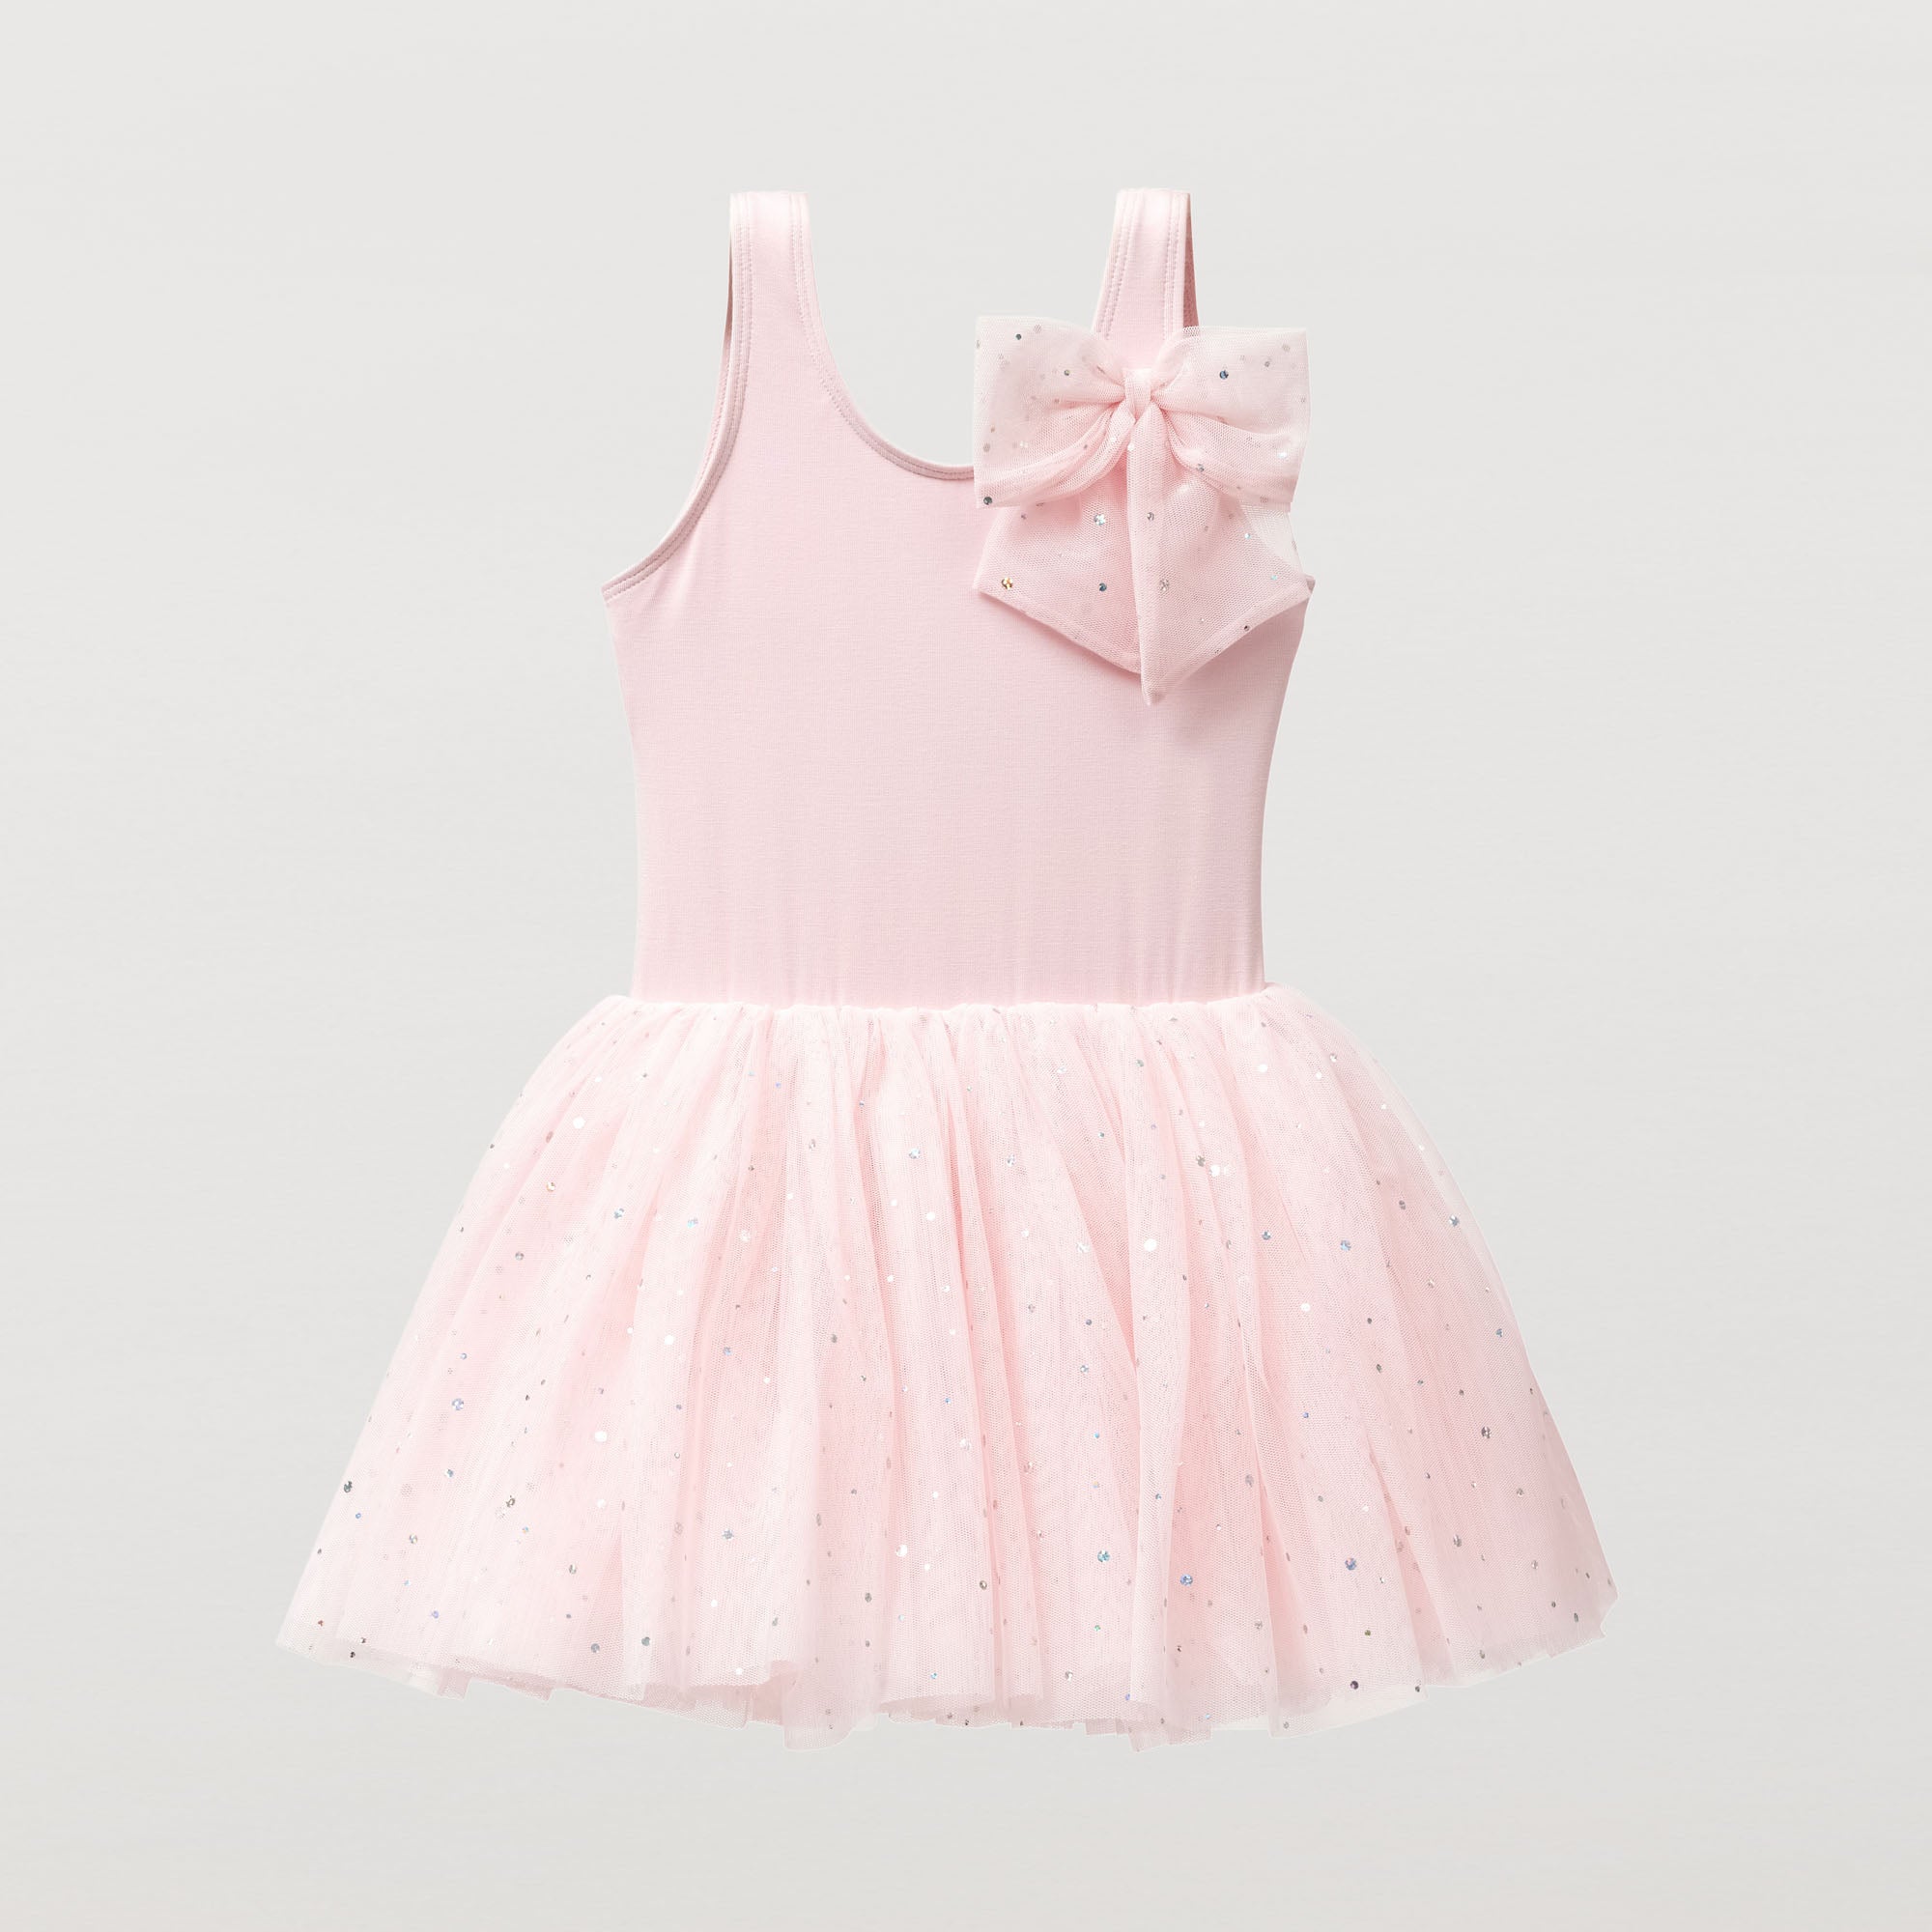 Flo Dancewear Girls Sequin Tutu Dress with Bow in Pink